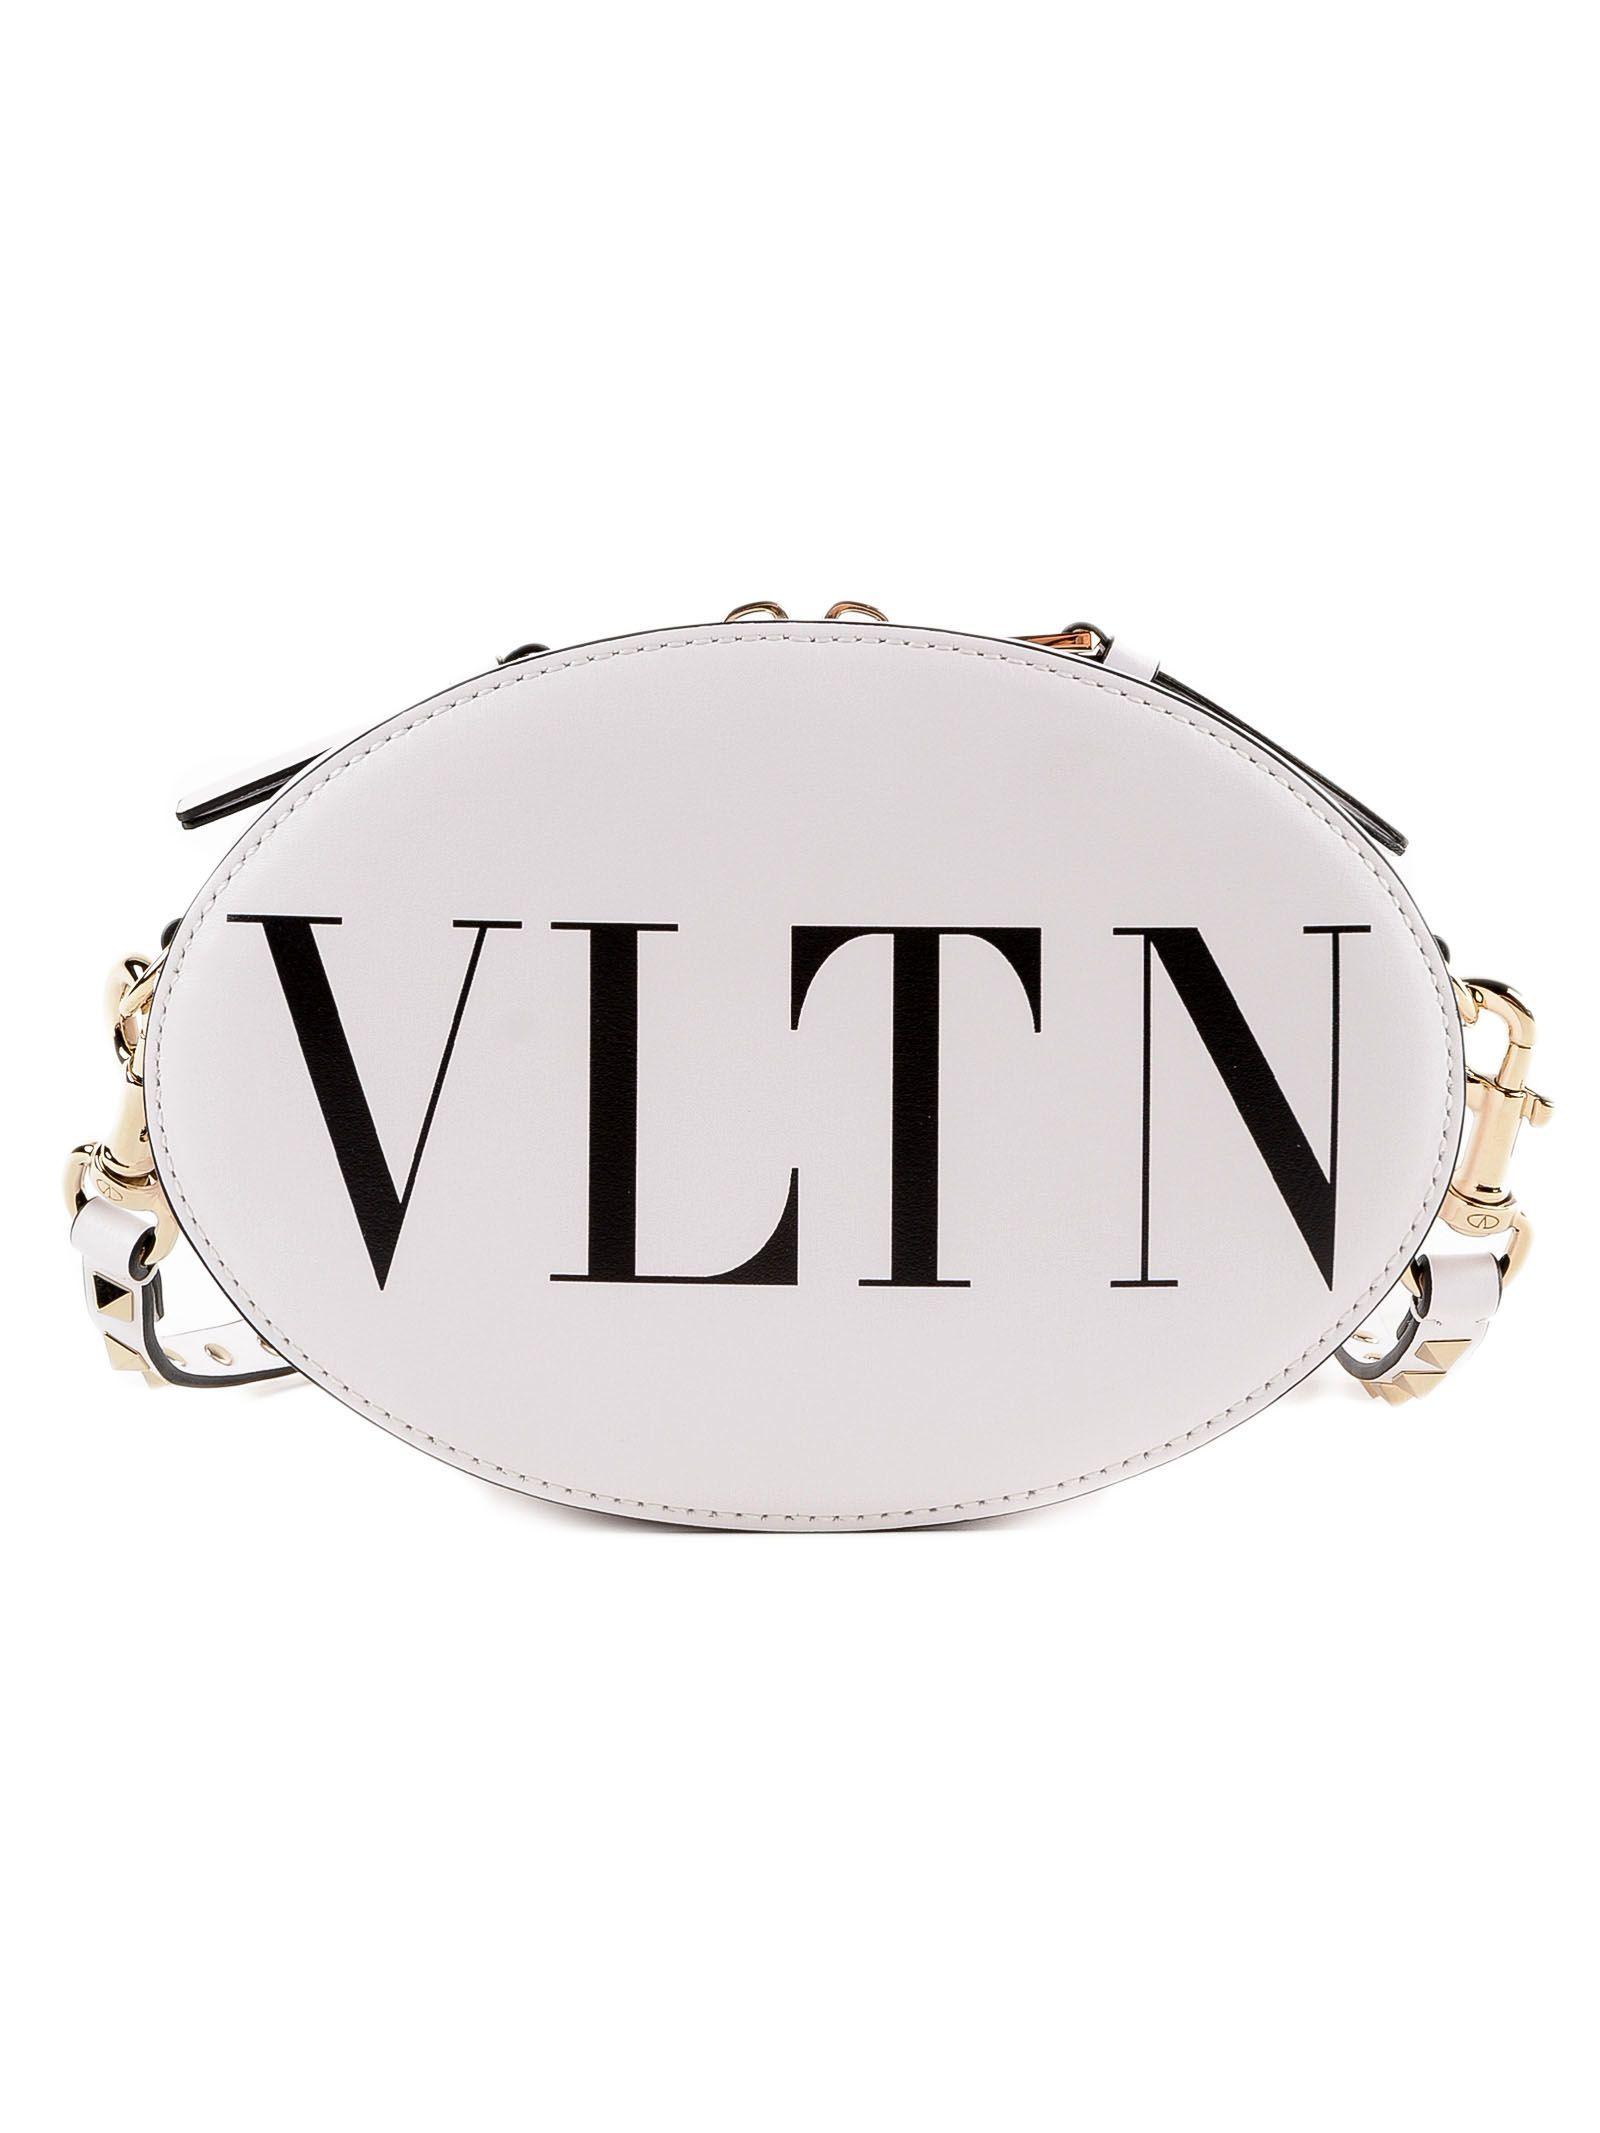 Valentino Logo - Valentino Logo Shoulder Bag In 0Vp Bianco/Nero | ModeSens